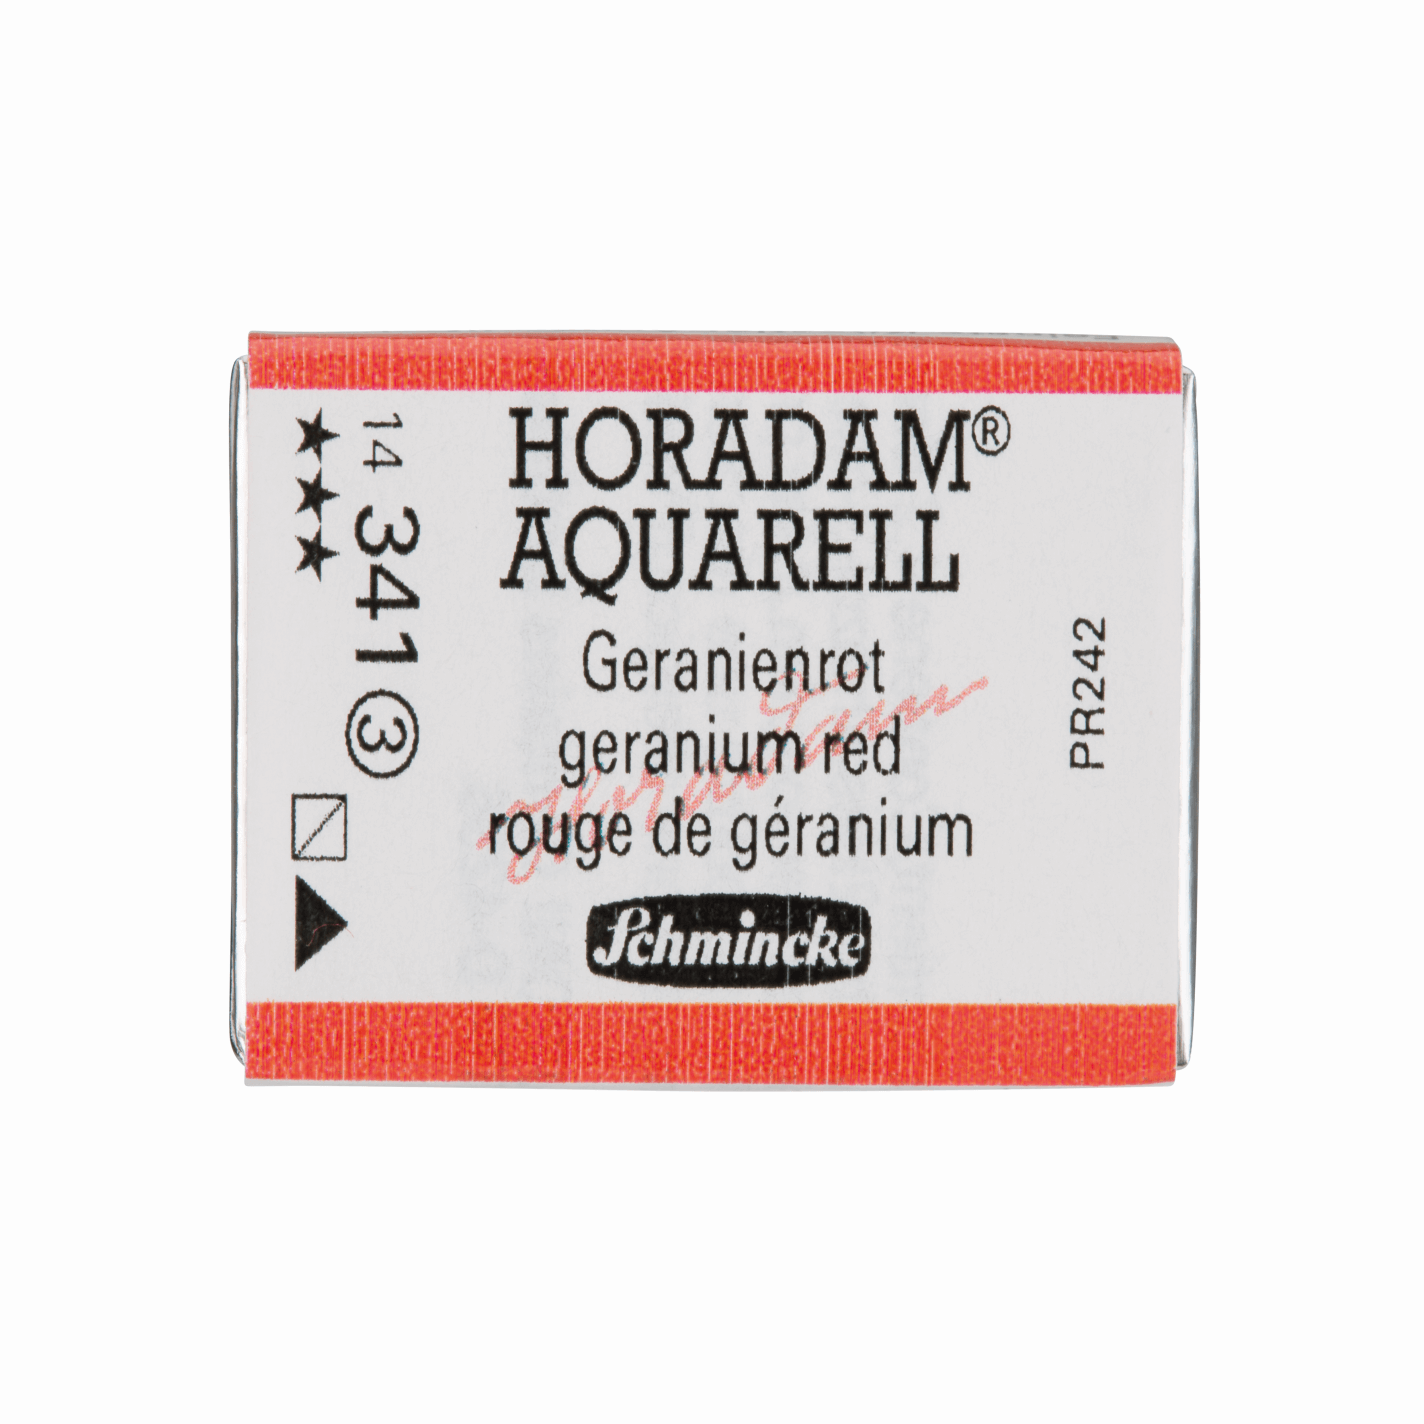 Schmincke Horadam Aquarell pans 1/1 pan Geranium Red